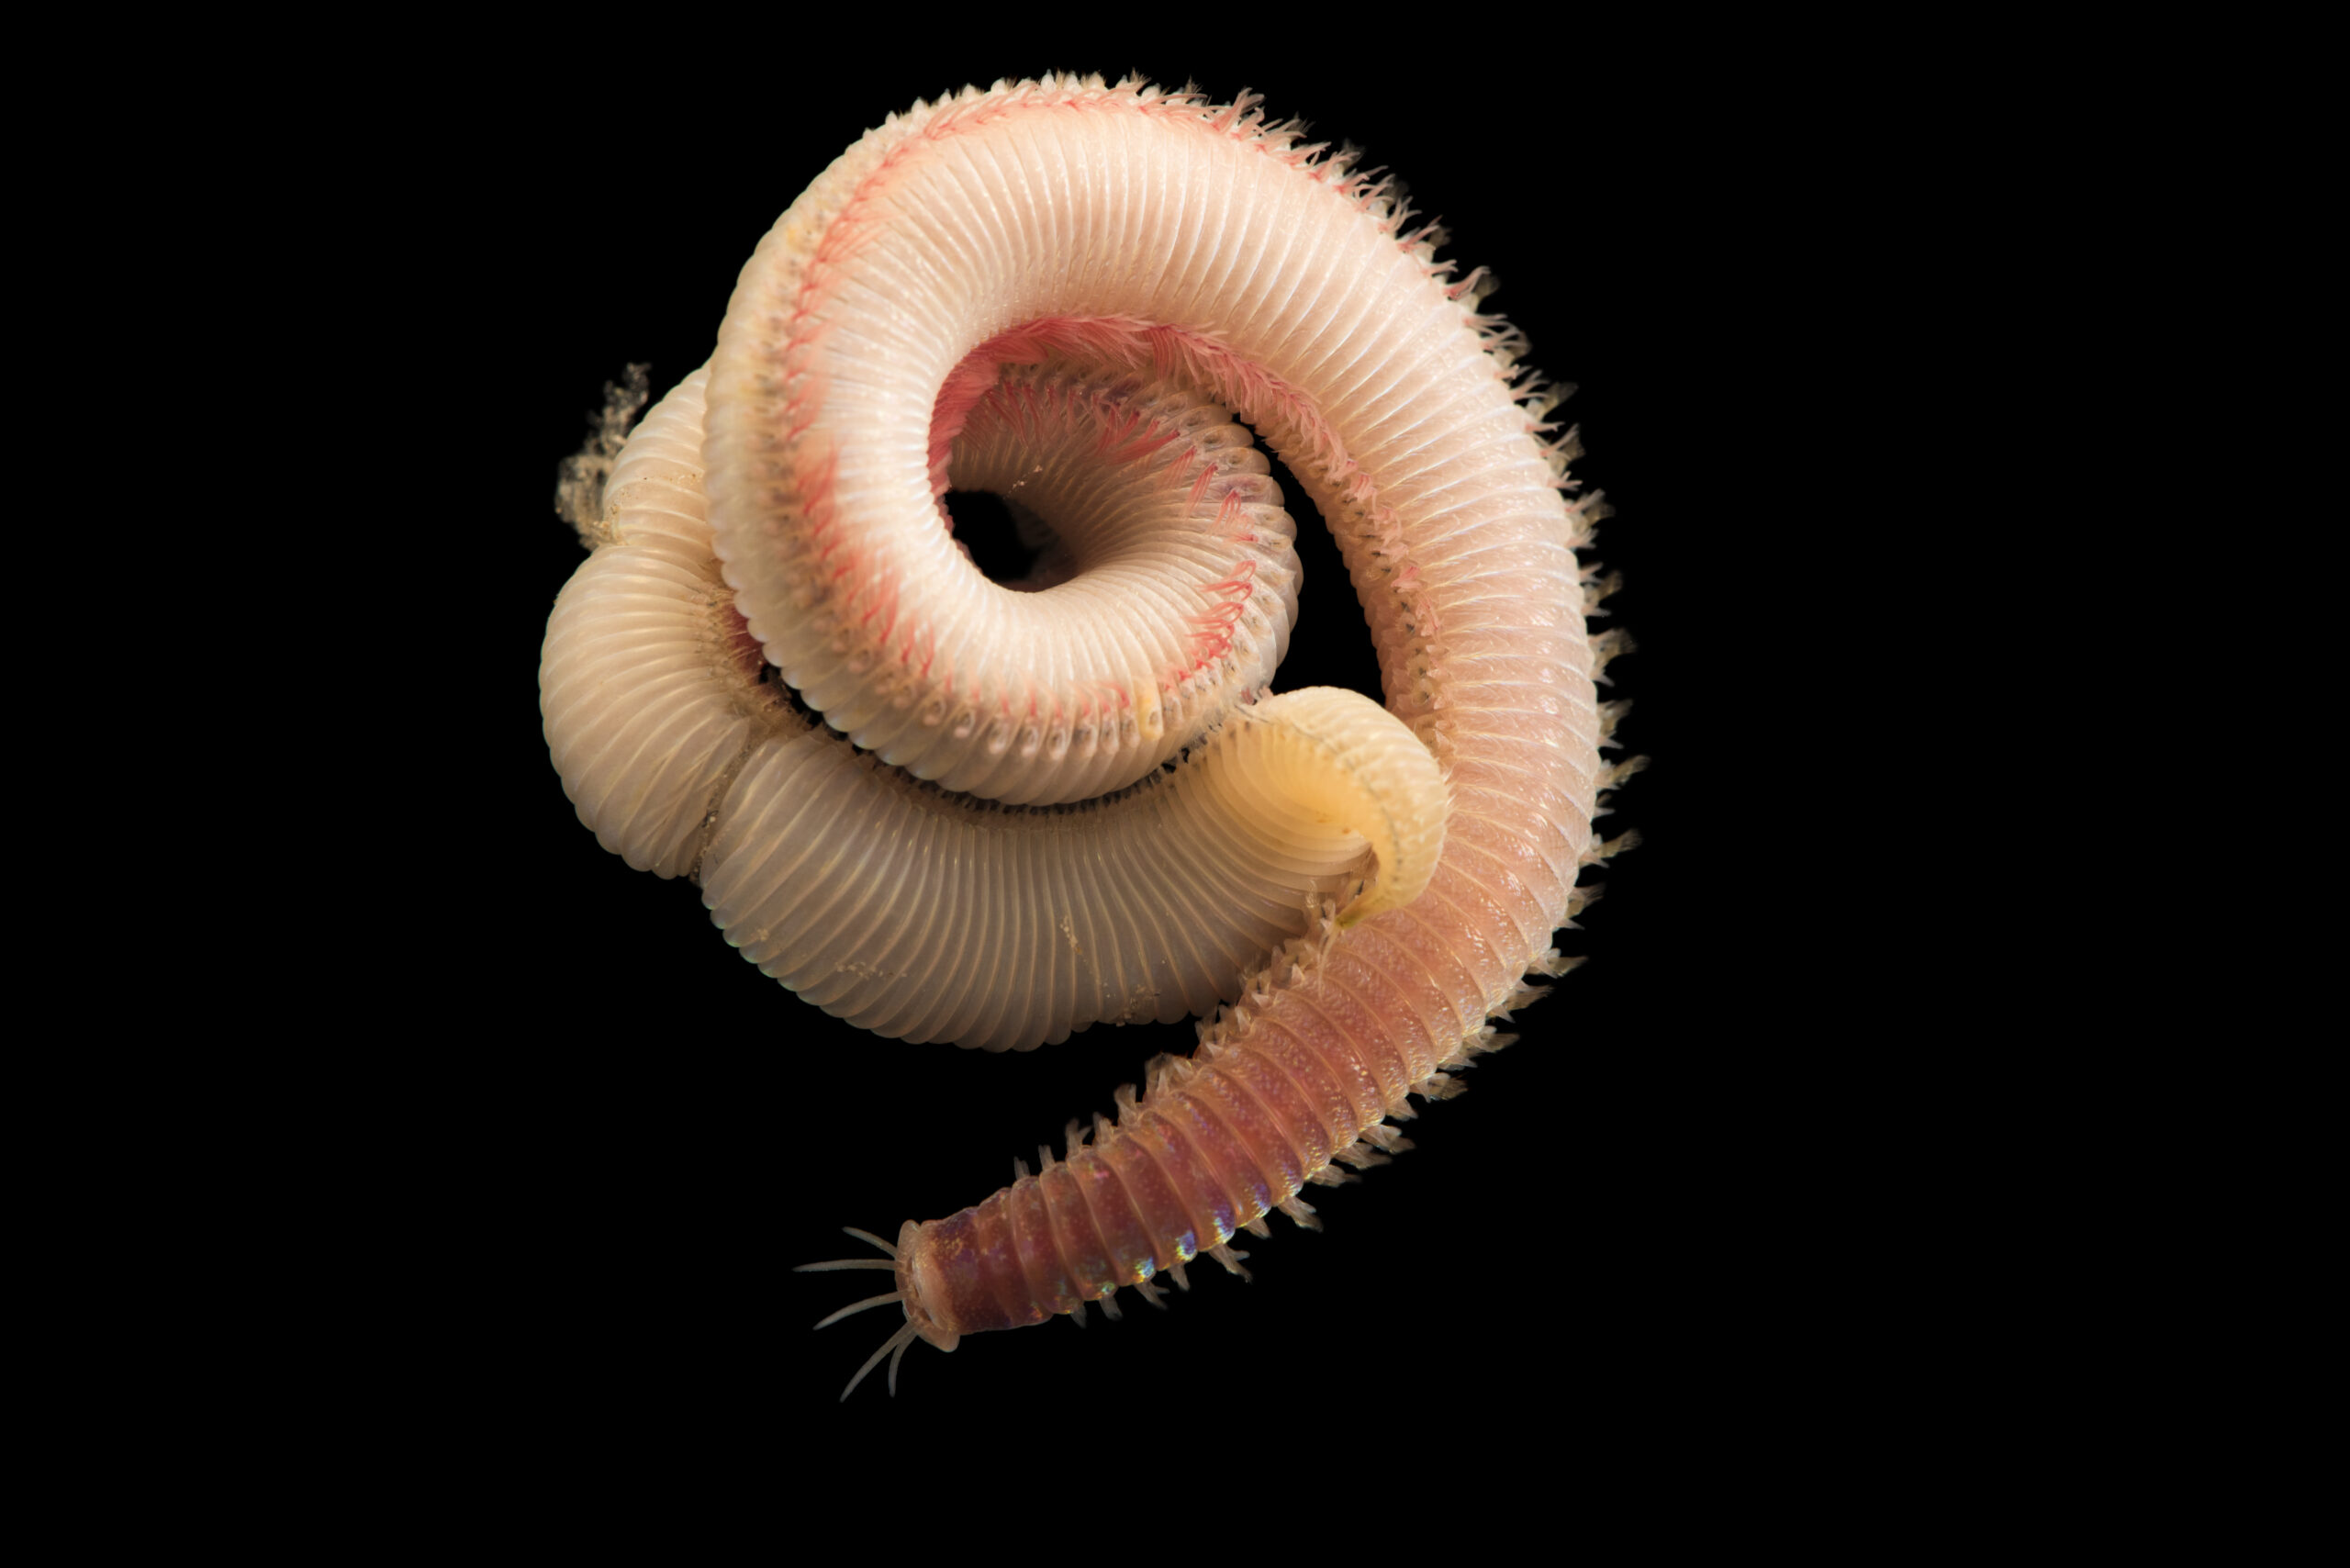 Blood worm (Glycera dibranchiata)